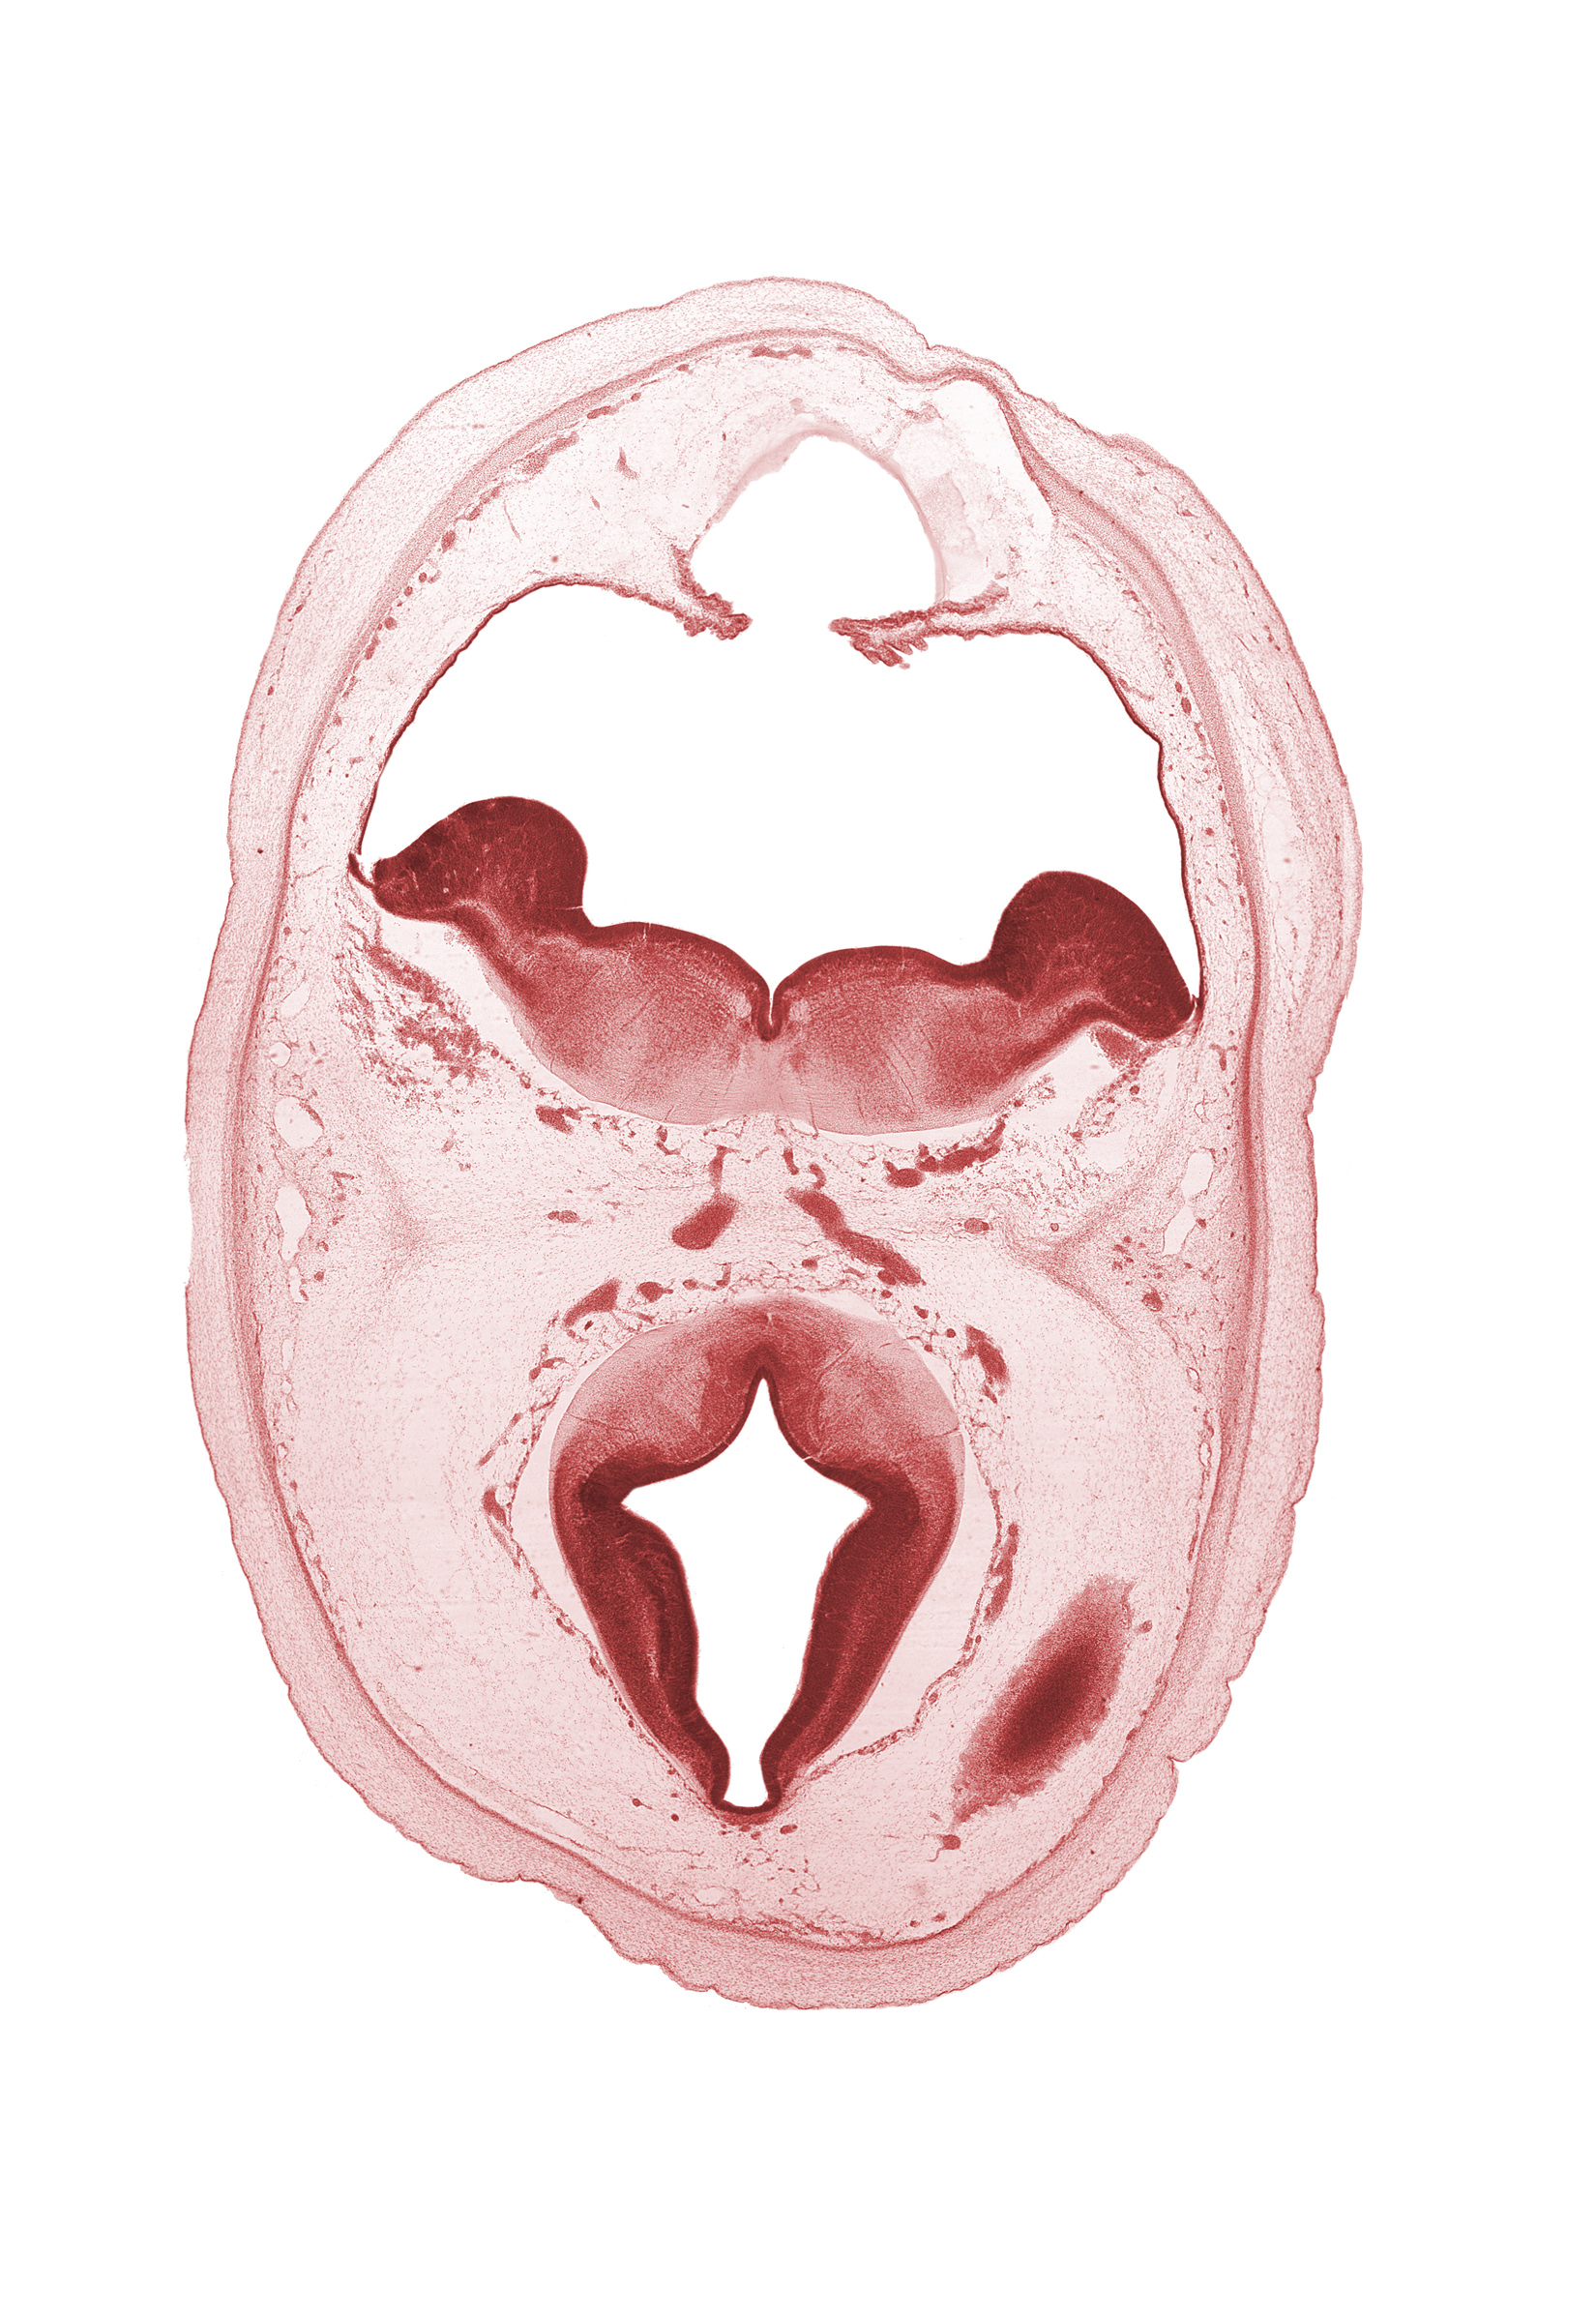 artifact separation(s), diverticulum of rhombencoel (fourth ventricle), dorsal thalamus, dural band for tentorium cerebelli, edge of cerebral vesicle(s), hypothalamic sulcus, hypothalamus, metencephalon, osteogenic layer, posterior cerebral artery, primordial transverse sinus, rhombencoel (fourth ventricle), subarachnoid space, sulcus dorsalis, sulcus limitans, surface ectoderm, third ventricle, venous plexus(es)